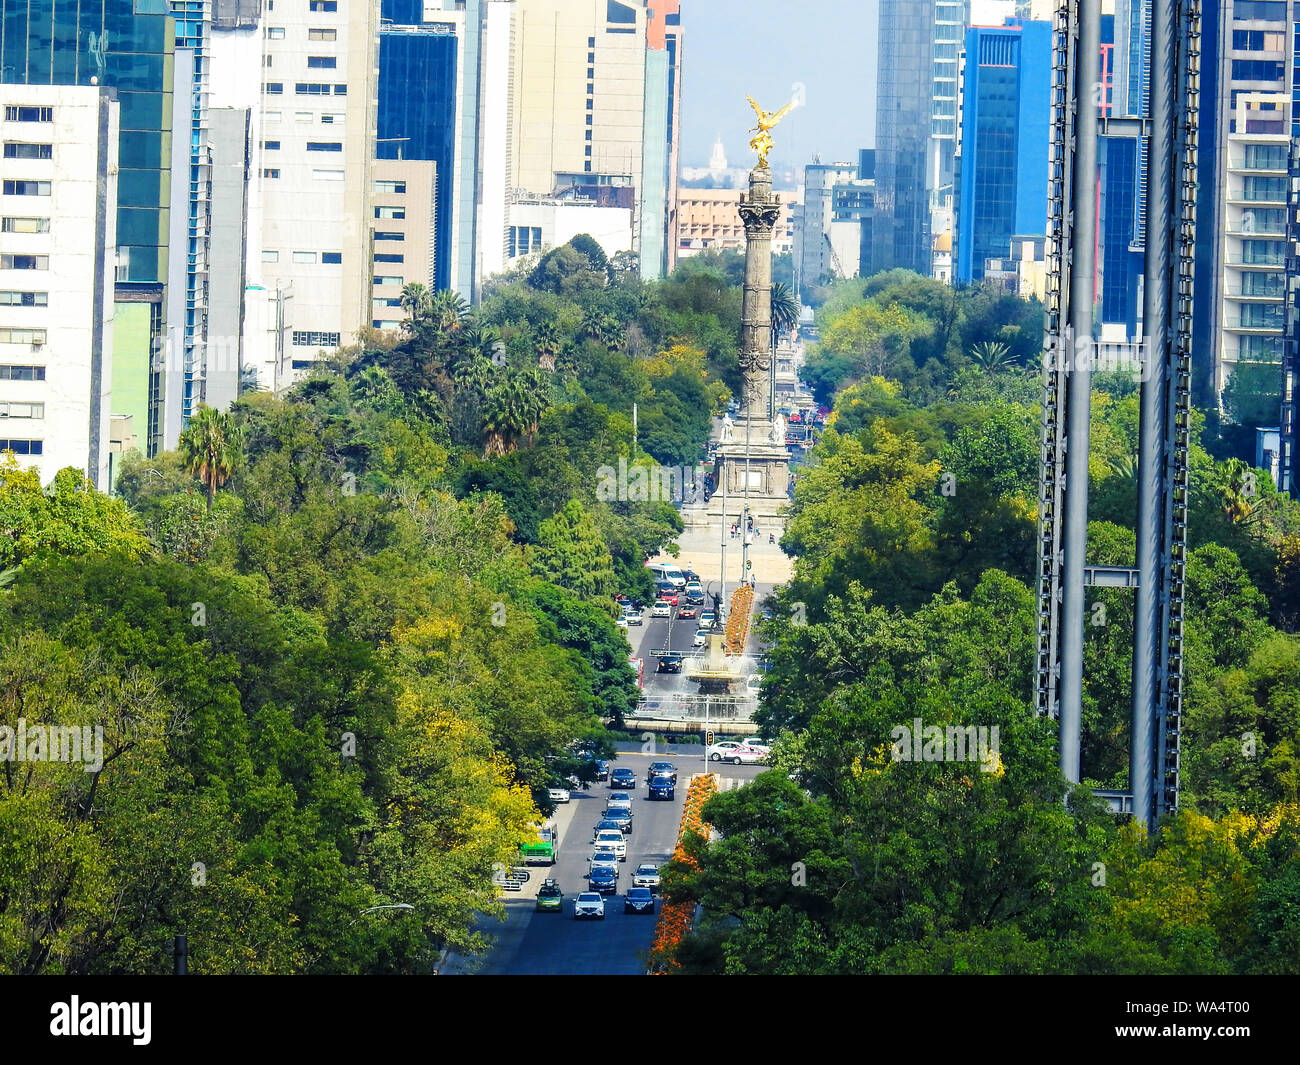 Paseo de la Reforma, main avenue of Mexico City Stock Photo